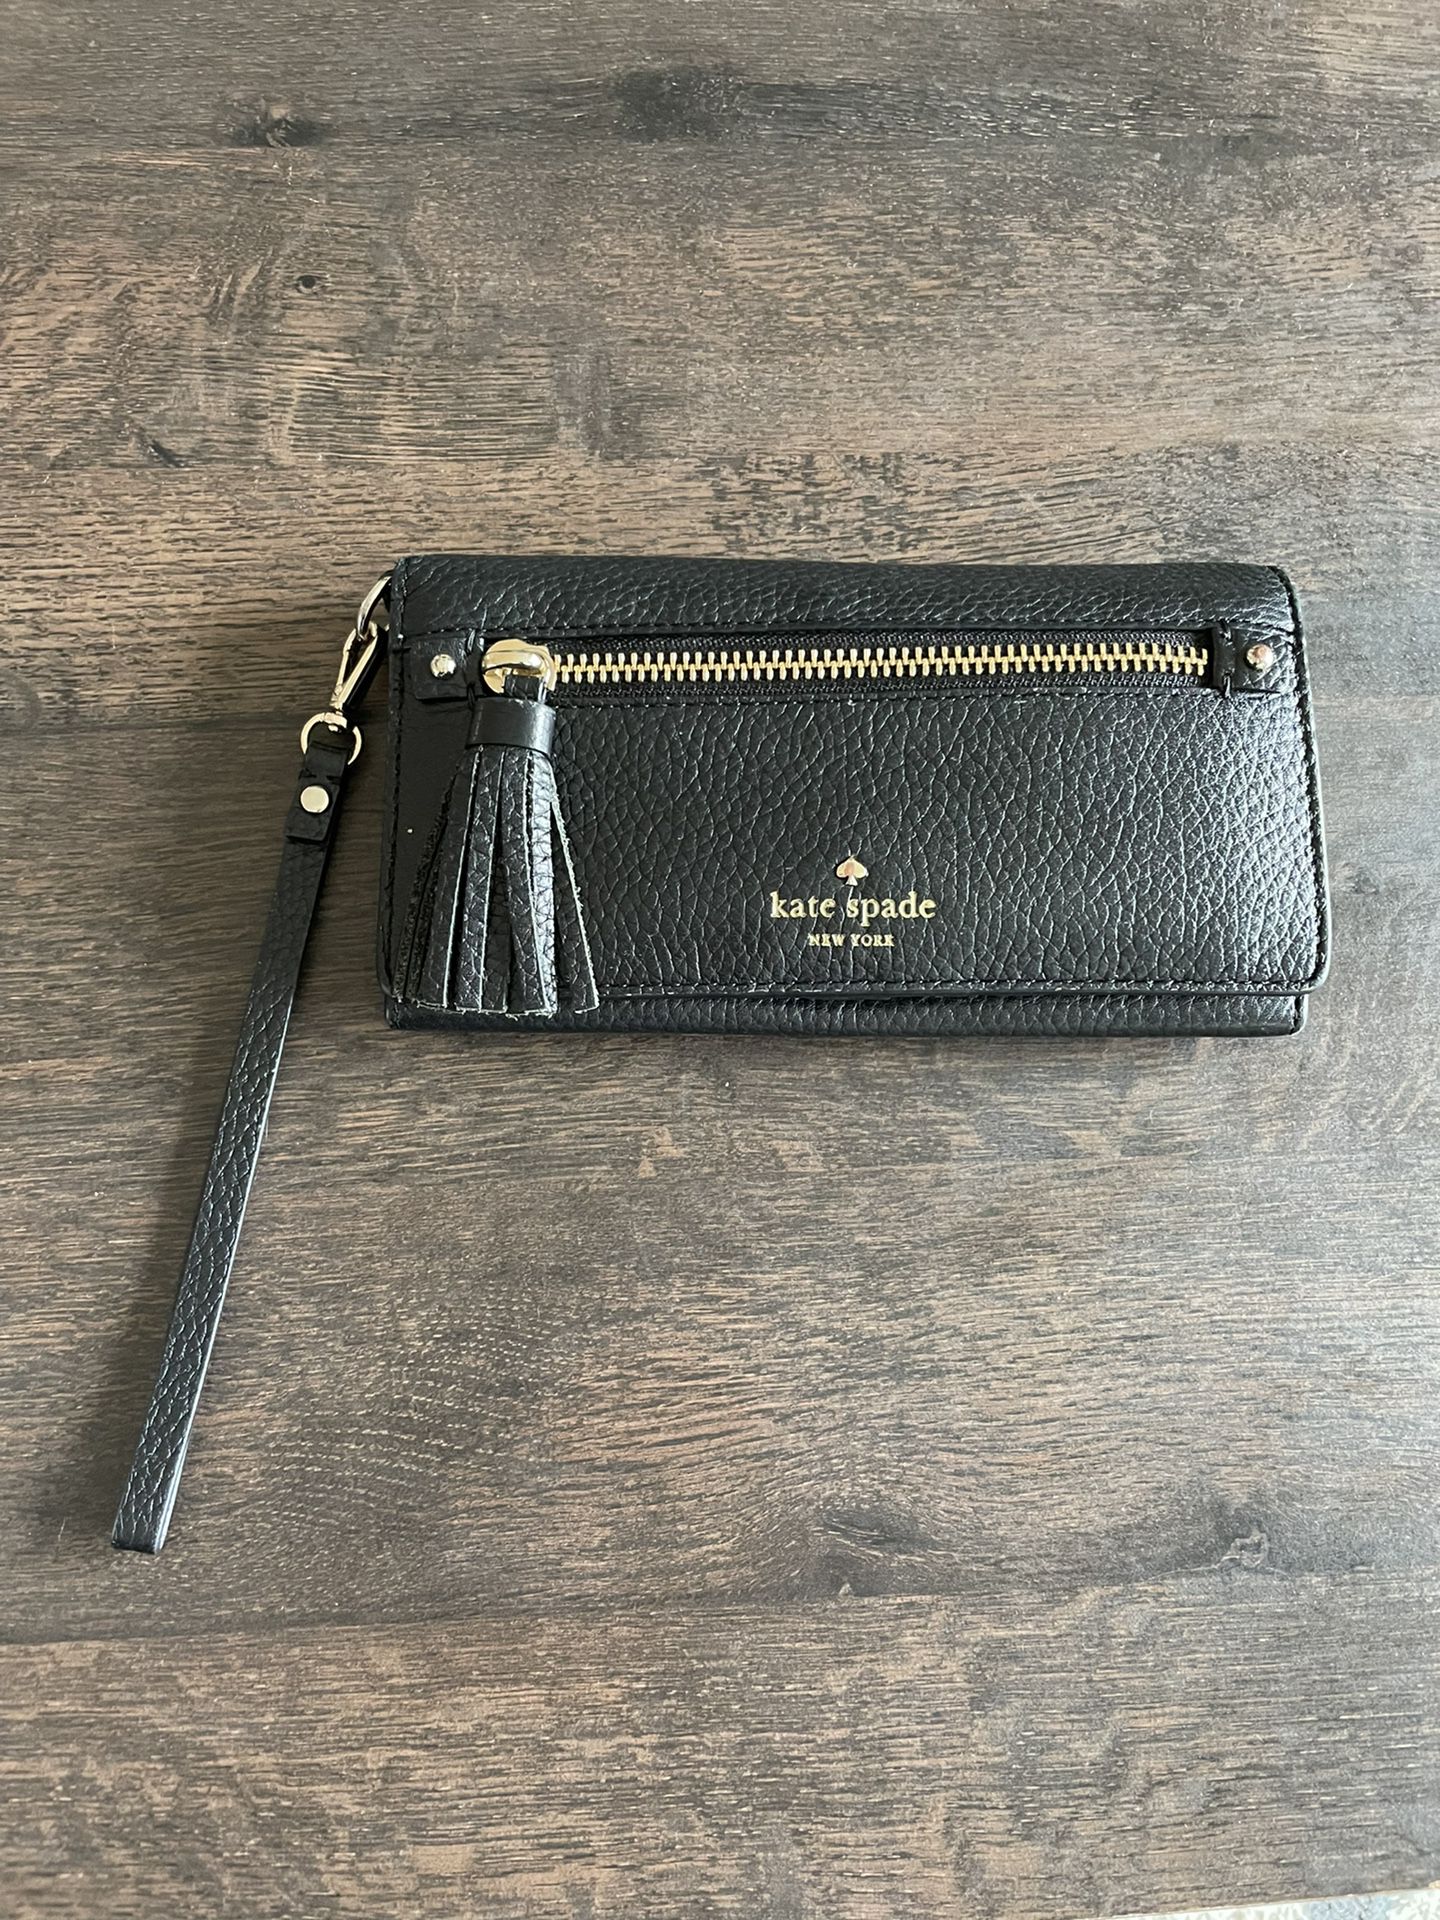 Kate Spade Black Leather Wristlet Wallet